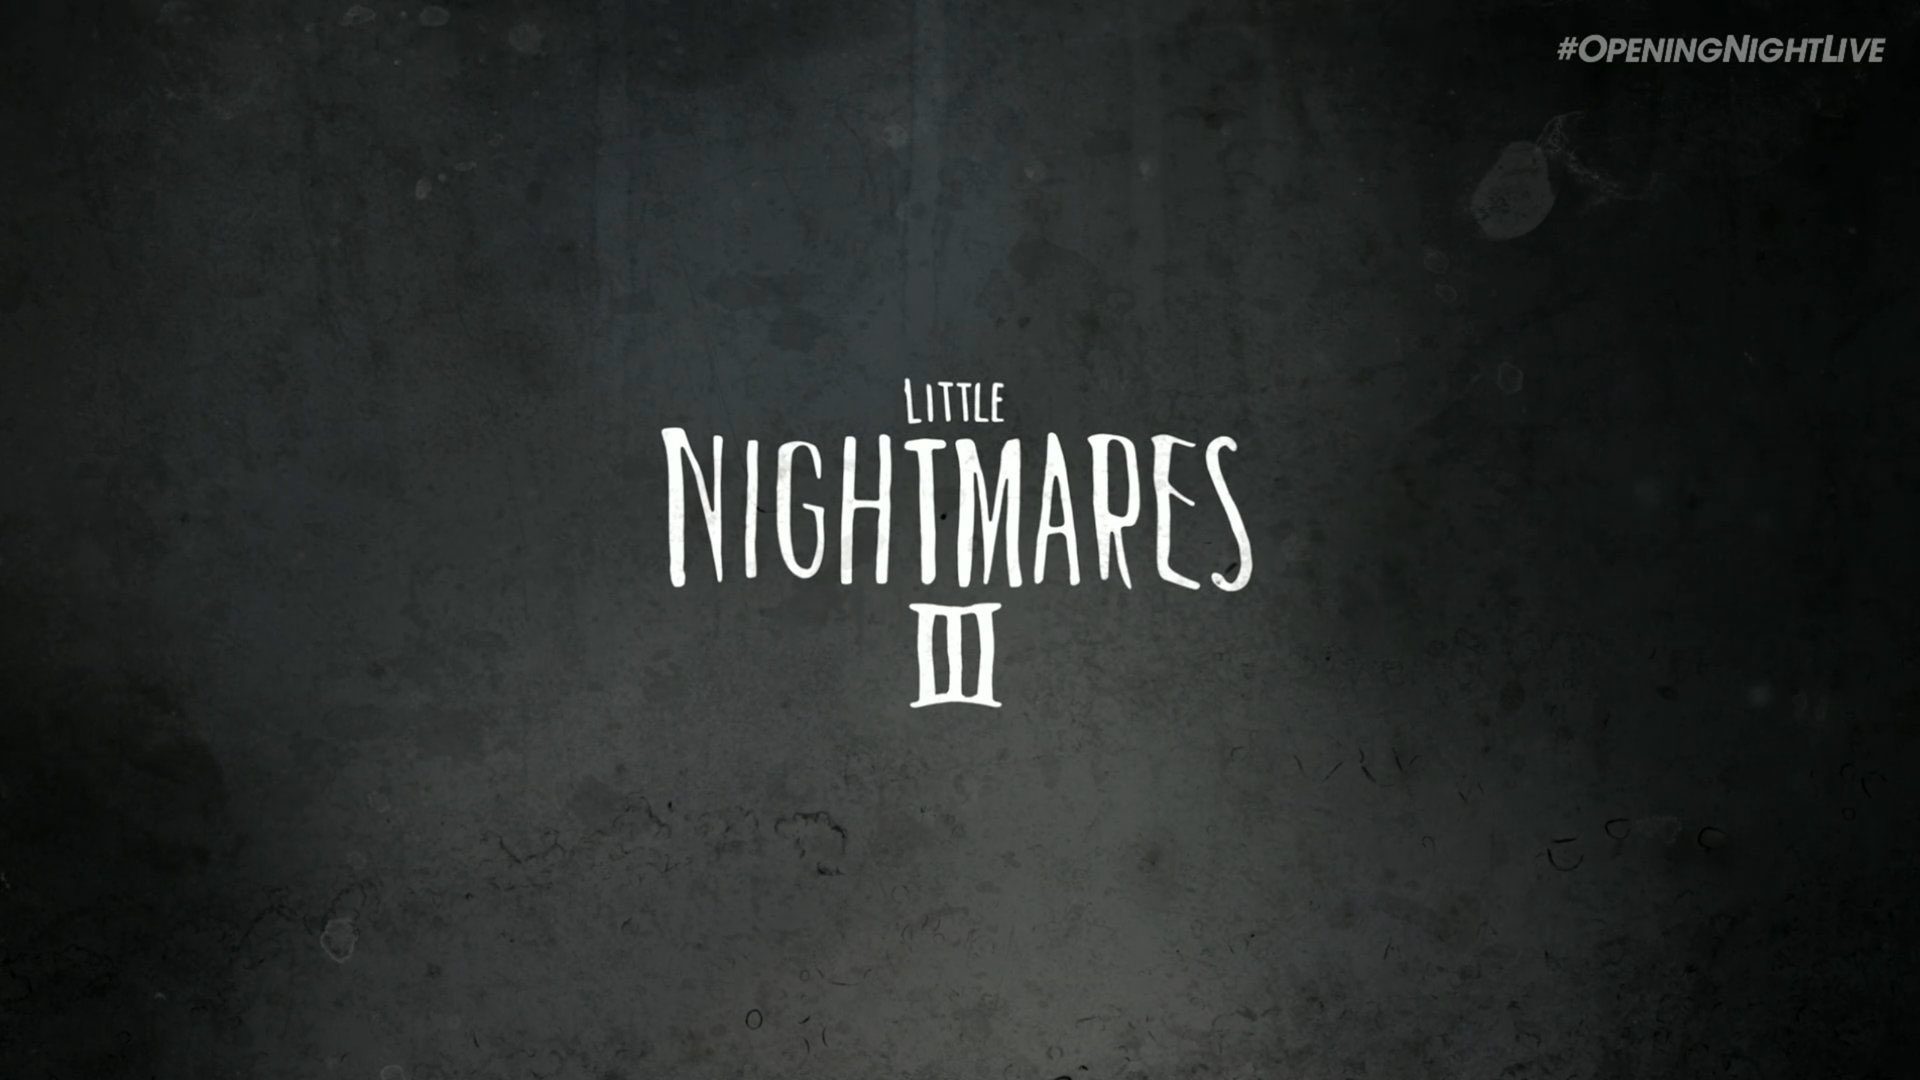 unexpected little nightmare crossover. : r/LittleNightmares